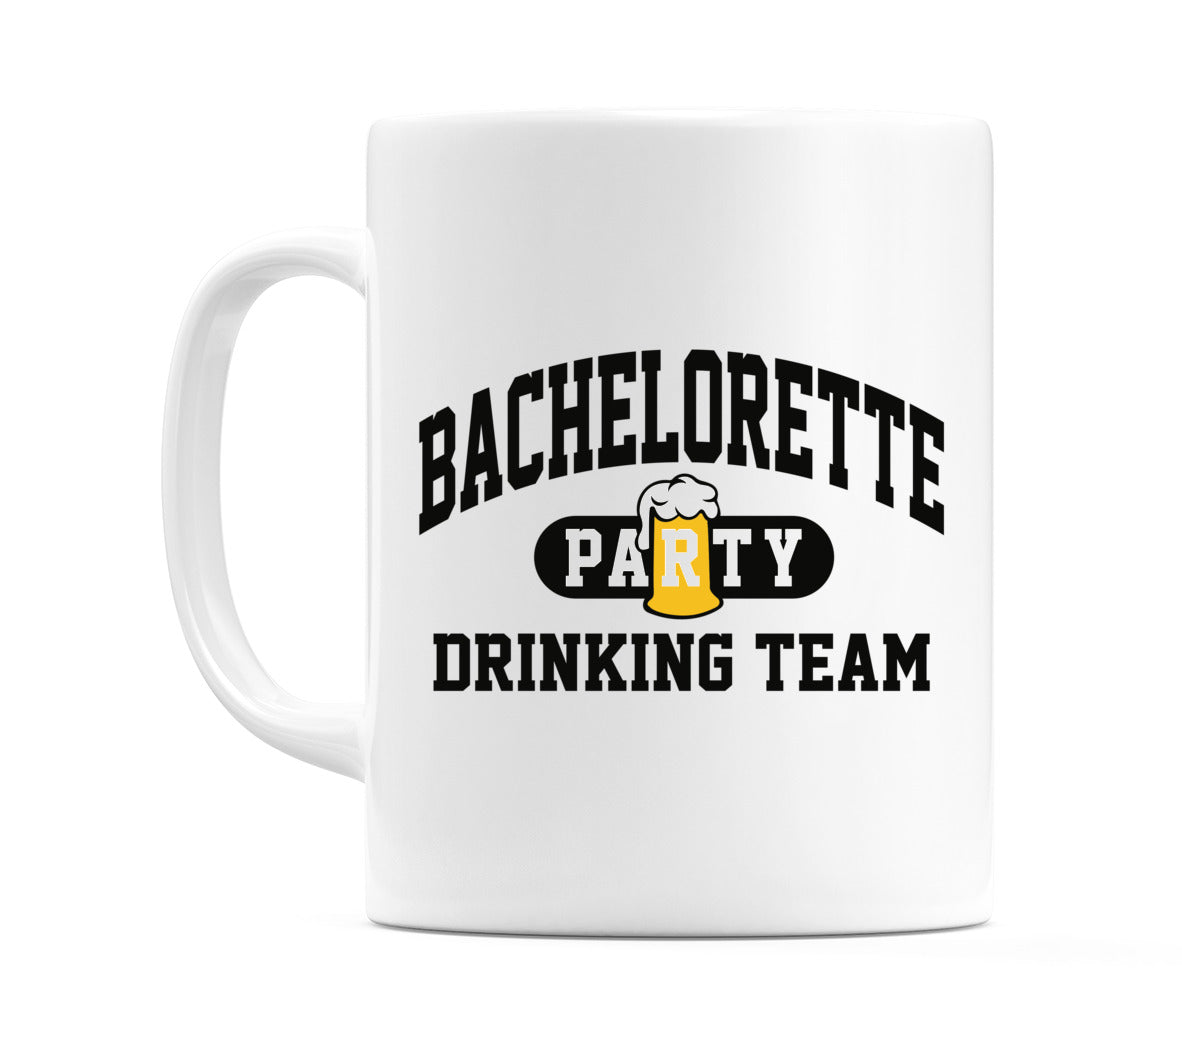 Bachelortte Party Drinking Team Mug